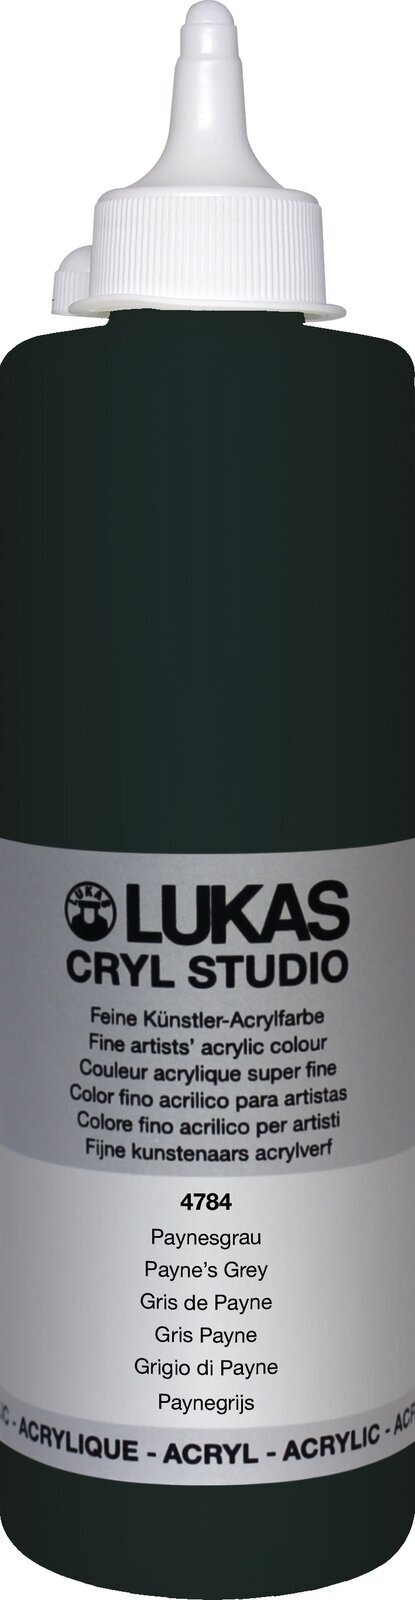 Acrylic Paint Lukas Cryl Studio Acrylic Paint 500 ml Payne's Grey